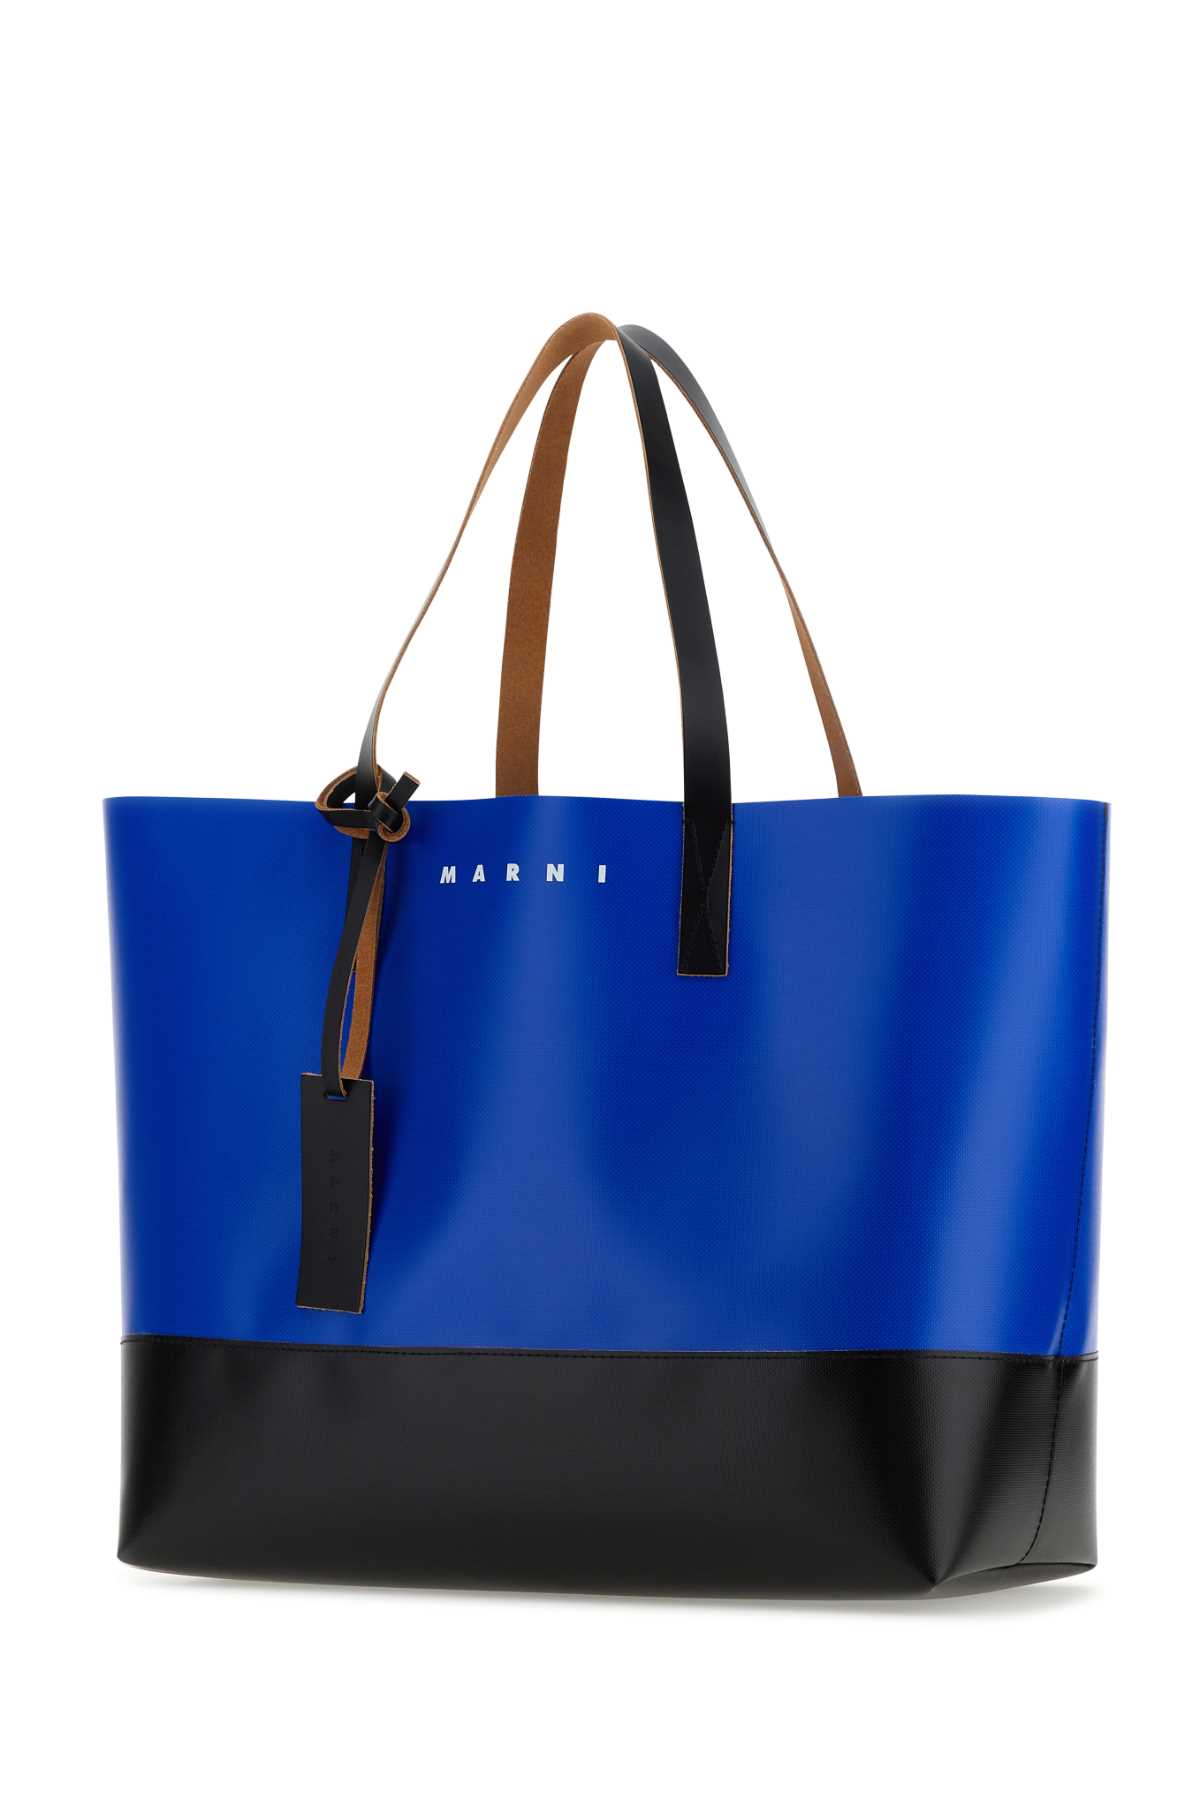 Marni Two-tone Pvc Shopping Bag In Royalblackblack